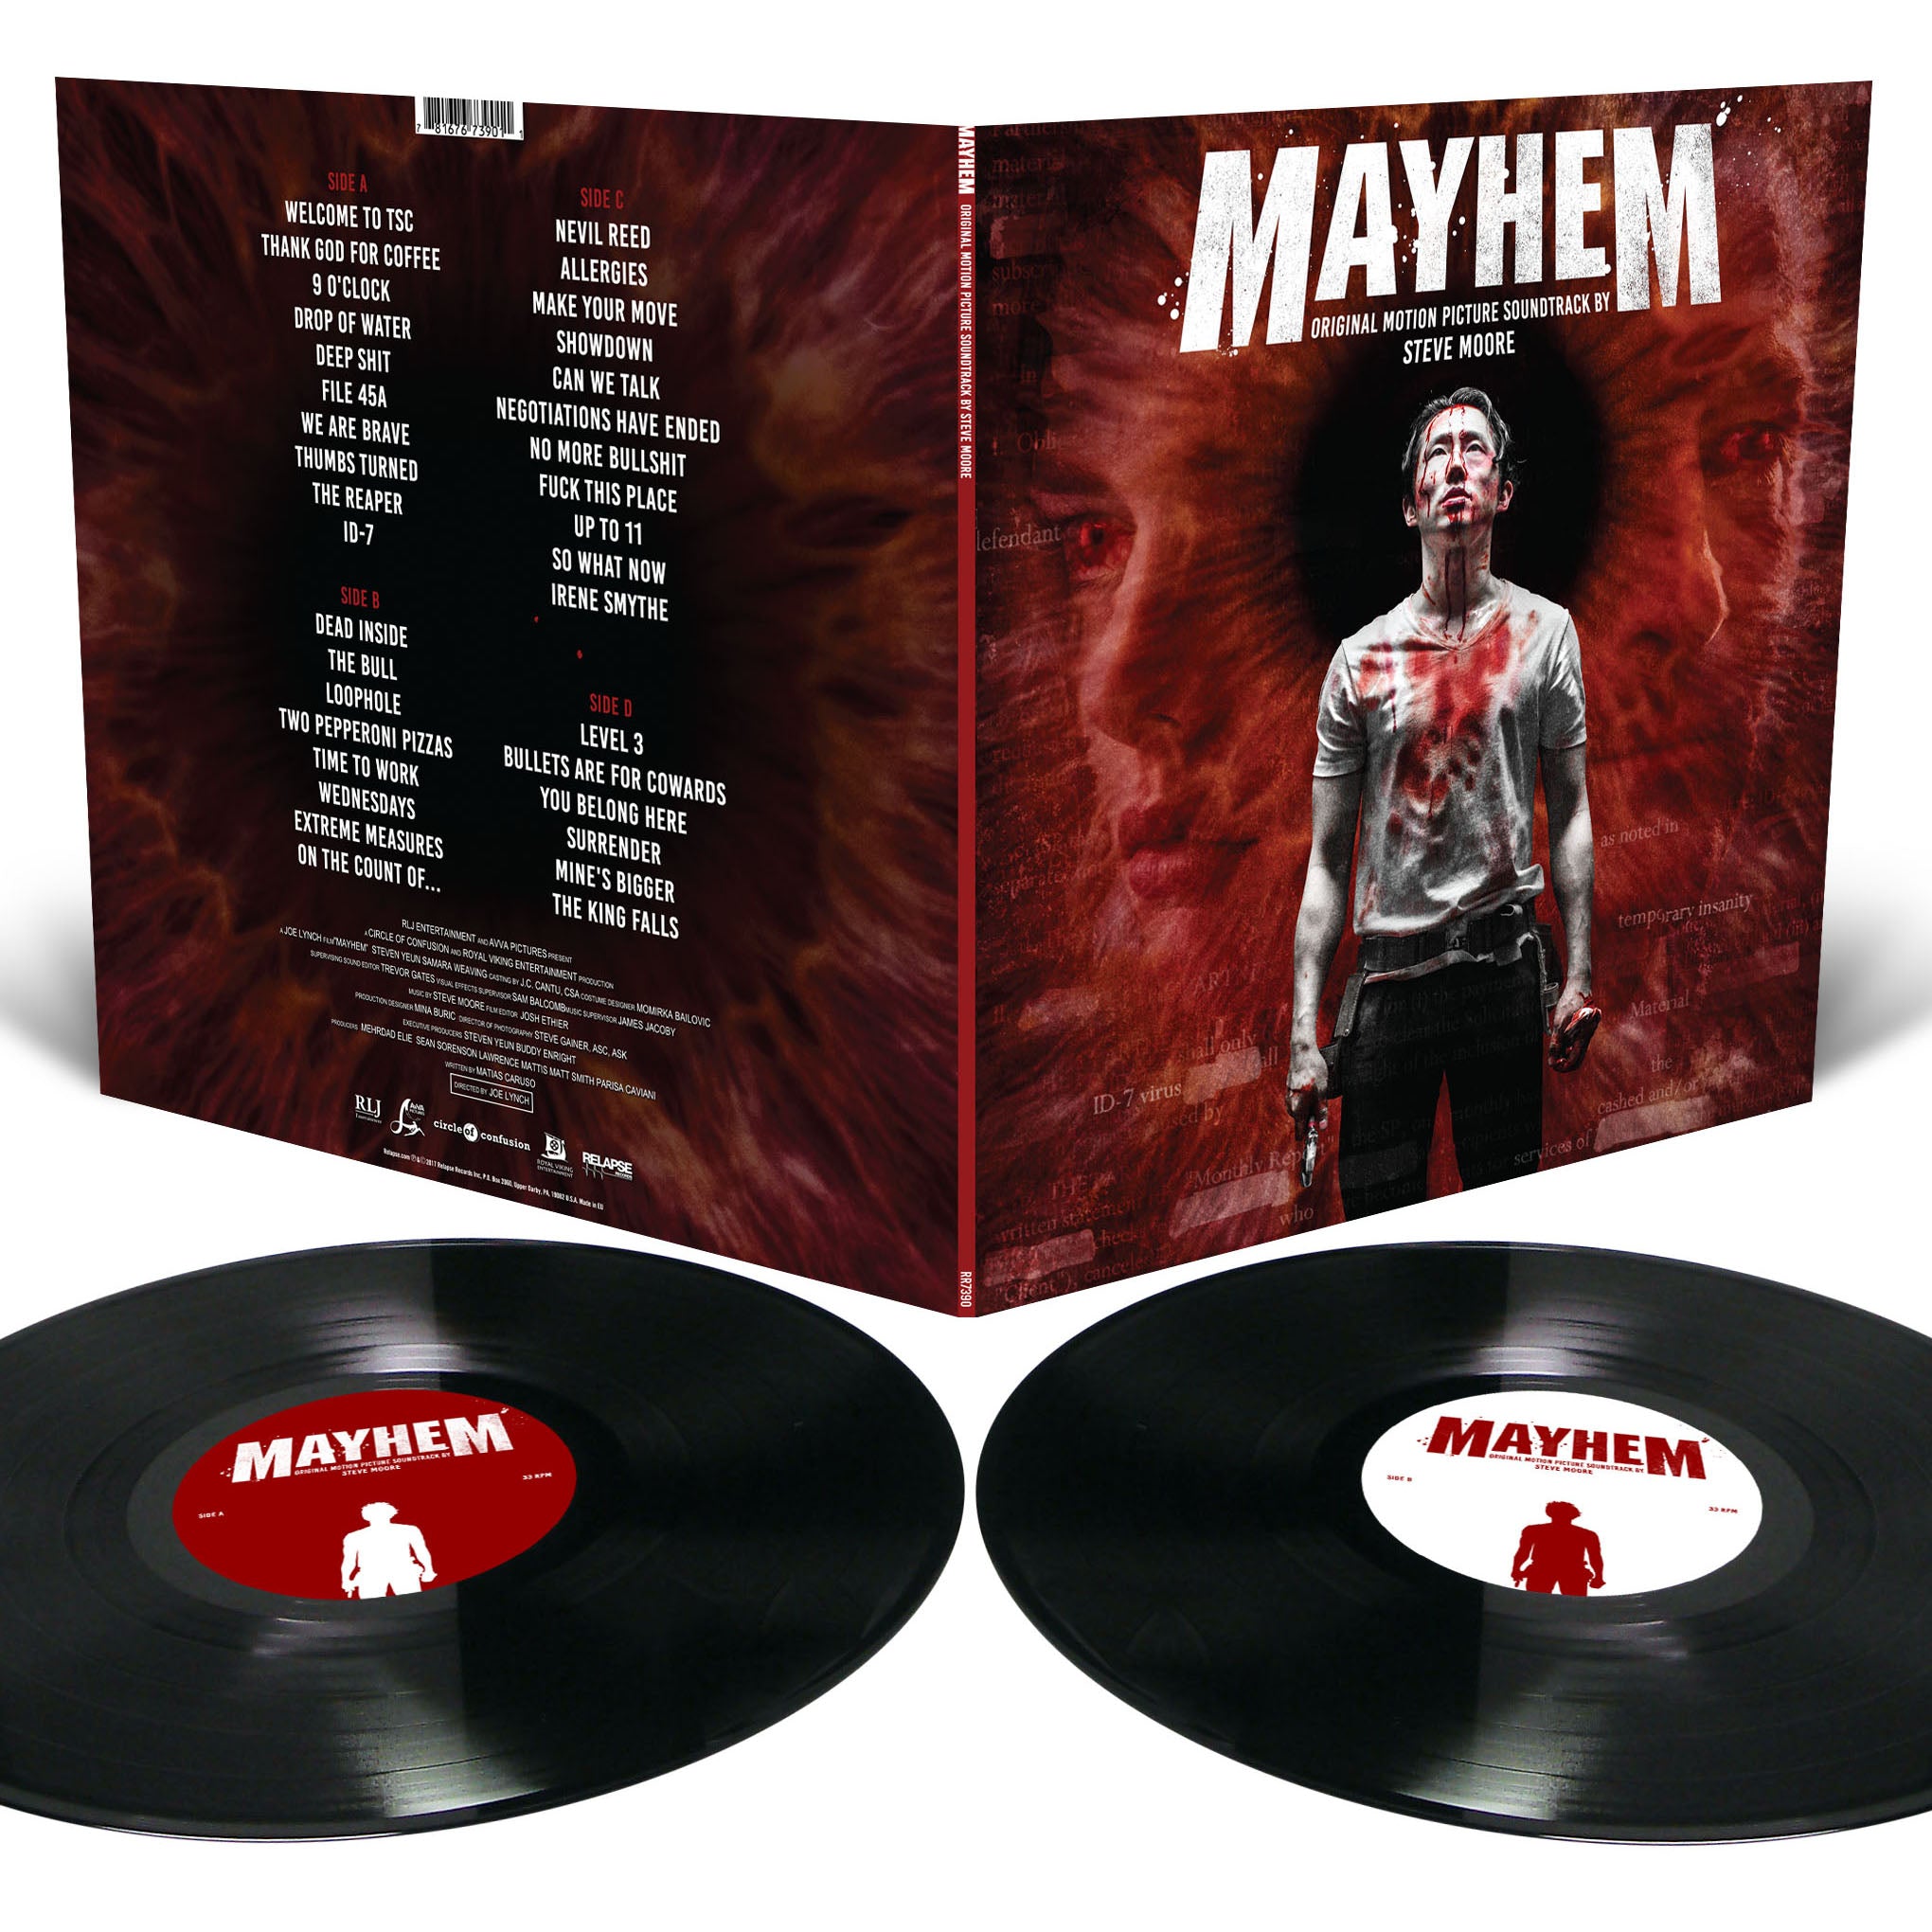 Steve Moore "MAYHEM - Original Motion Picture Soundtrack" 2x12"